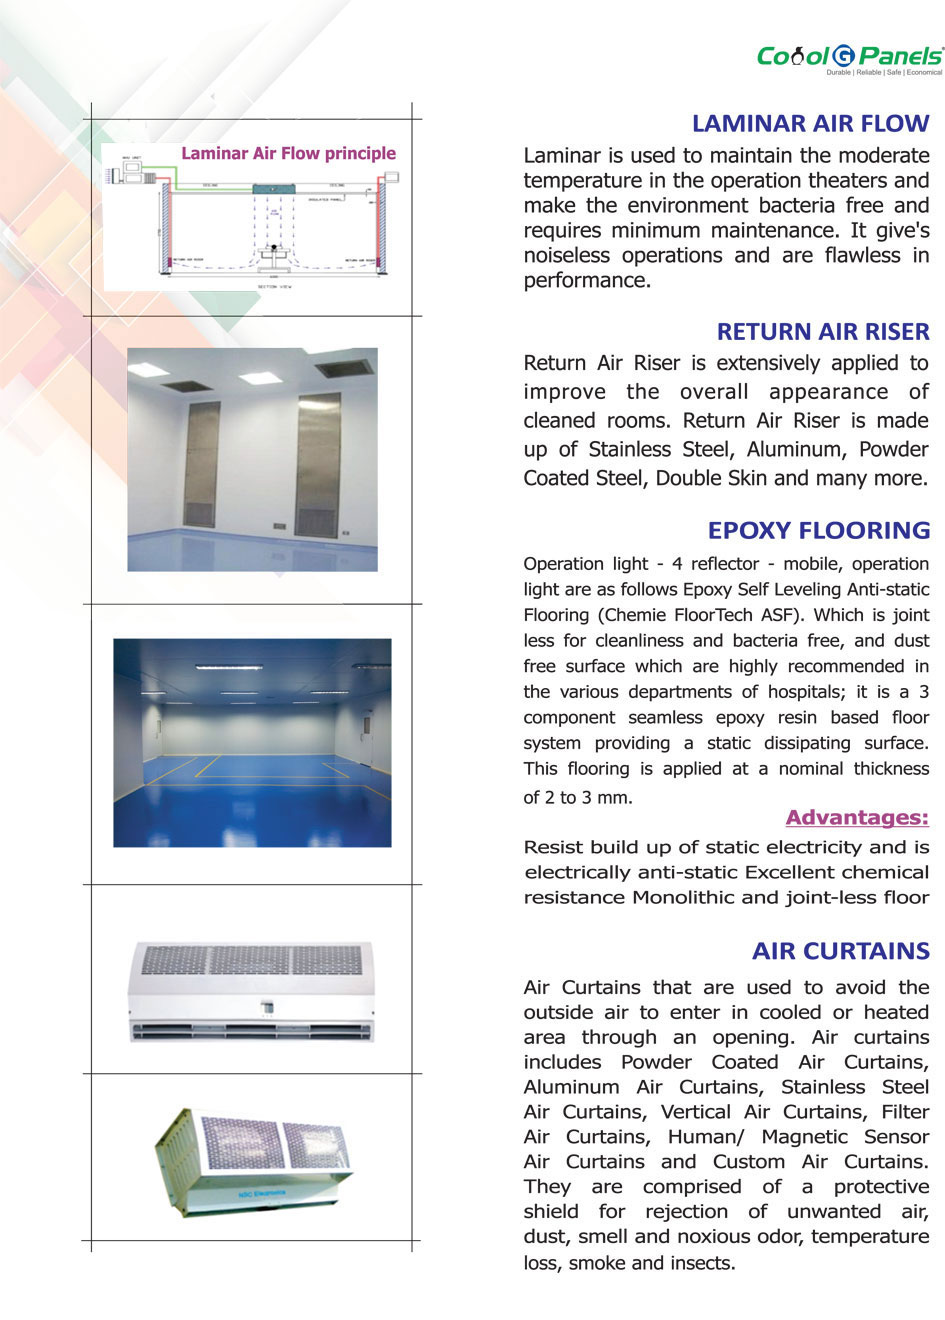 Clean Room :: Shrreya Systems